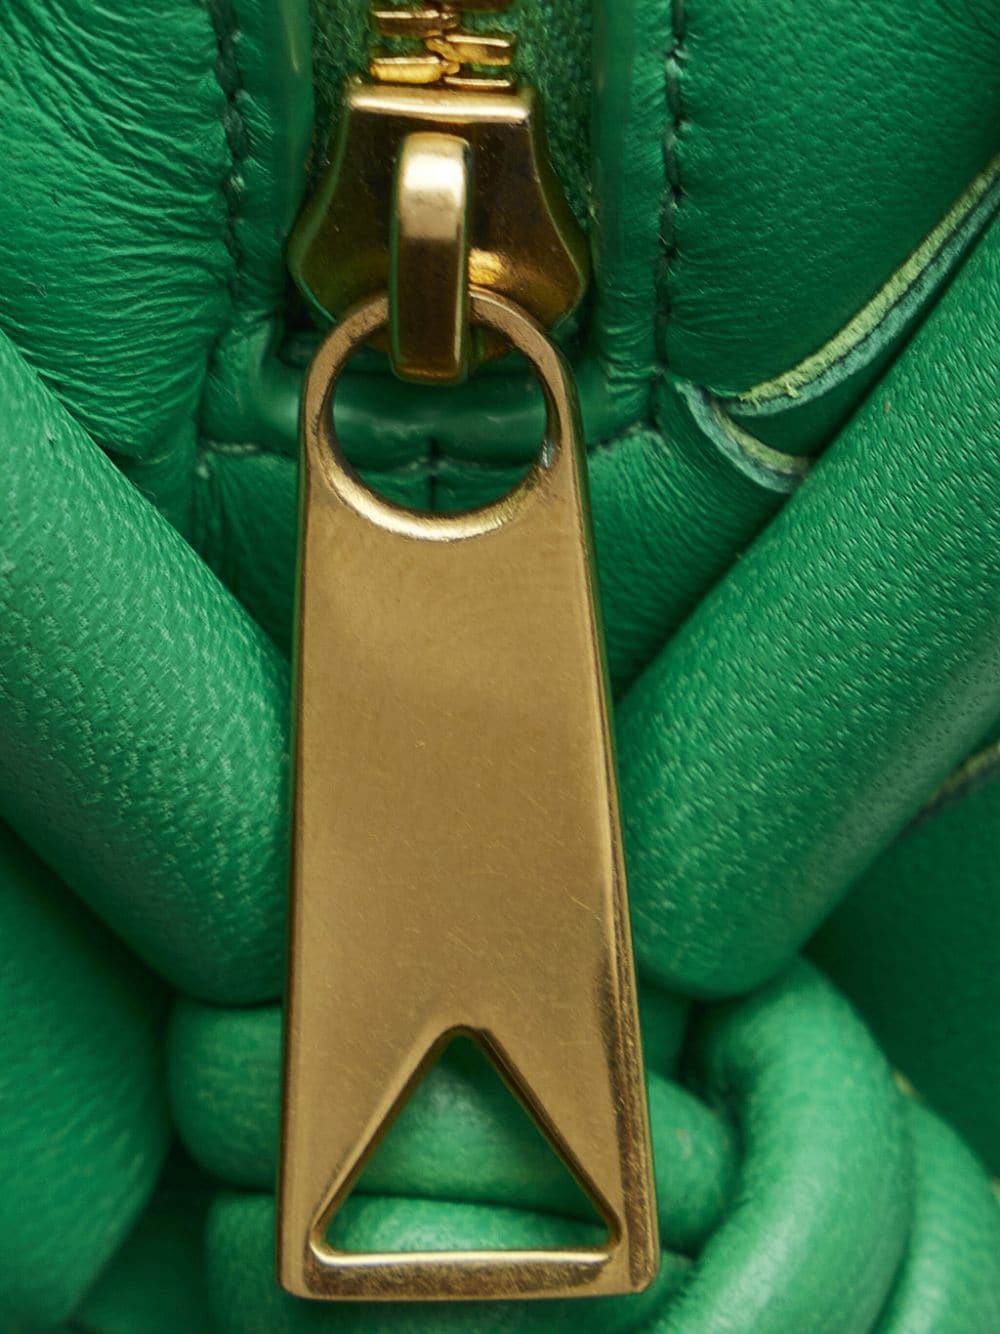 Bottega Veneta Mini Loop Shoulder Bag in Teal Washed Gold